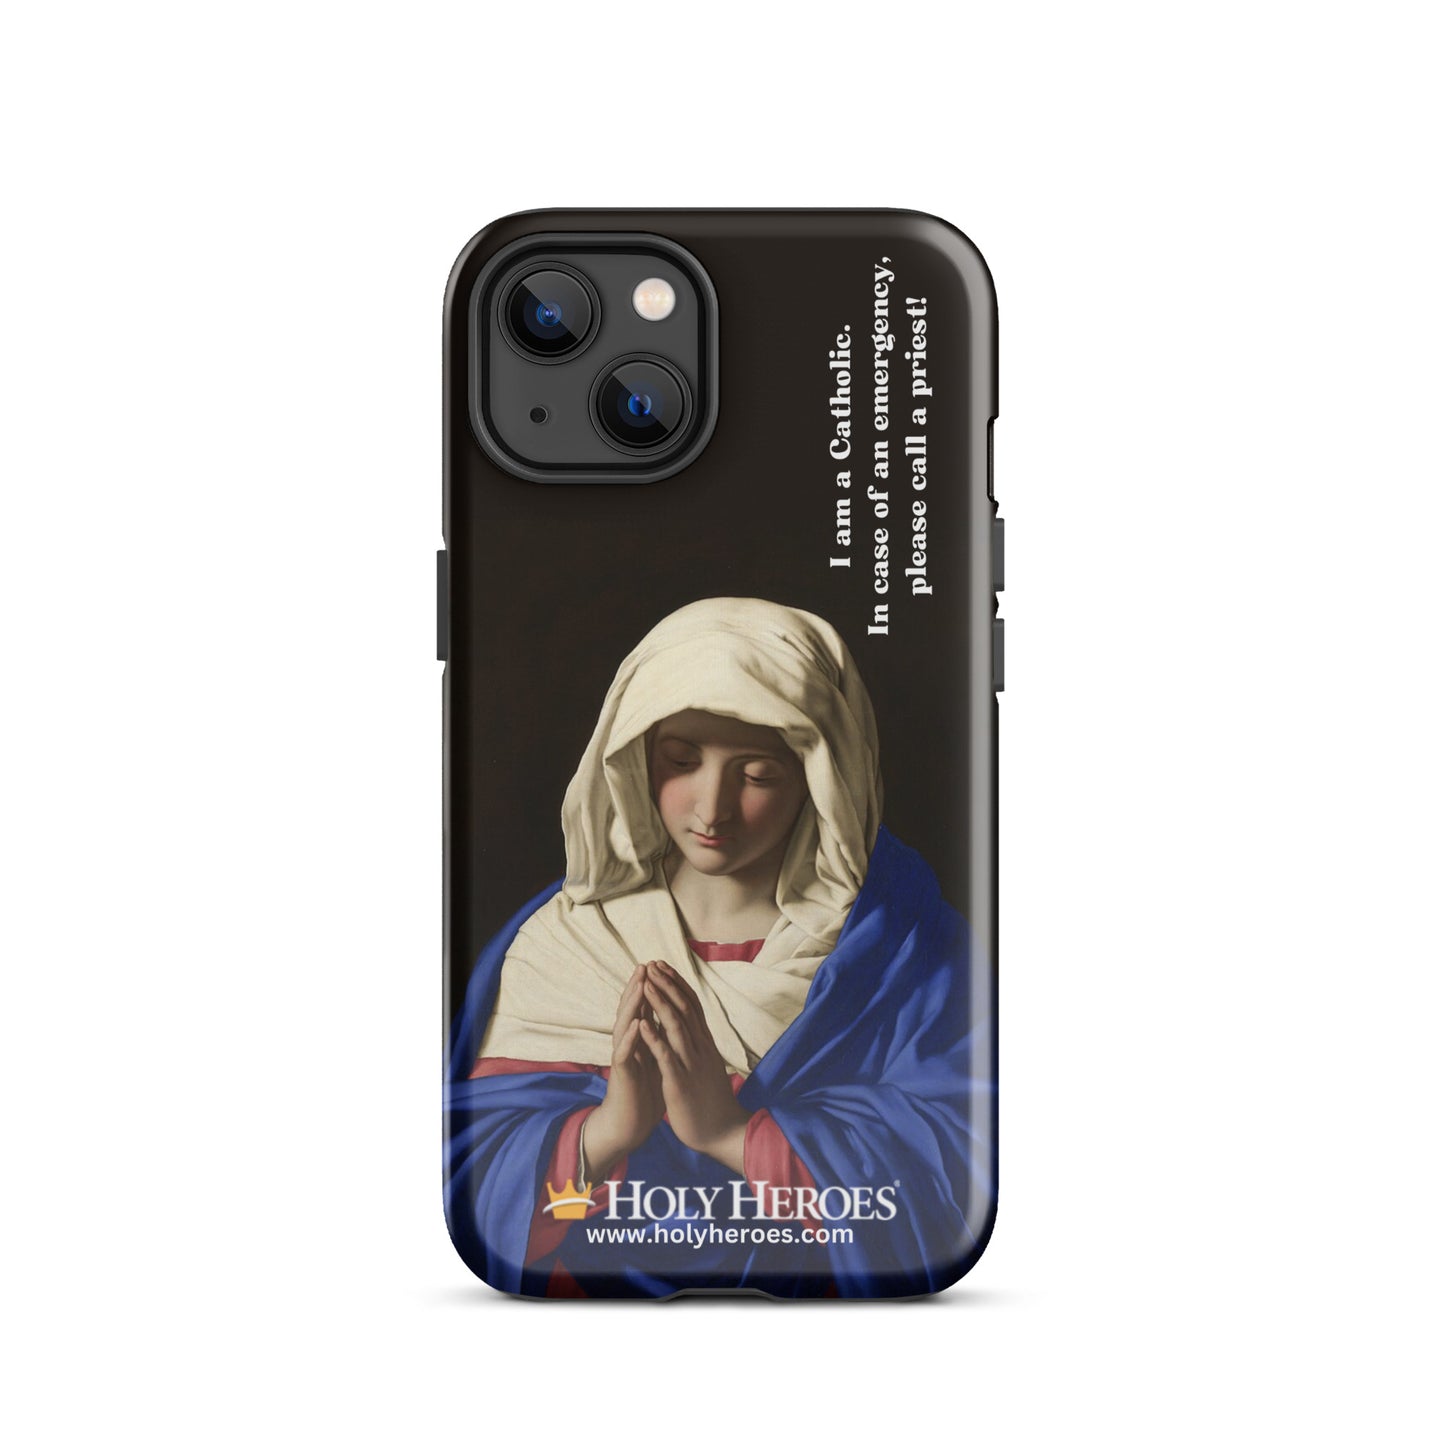 Praying Virgin Mary "I am a Catholic" Tough Case for iPhone®